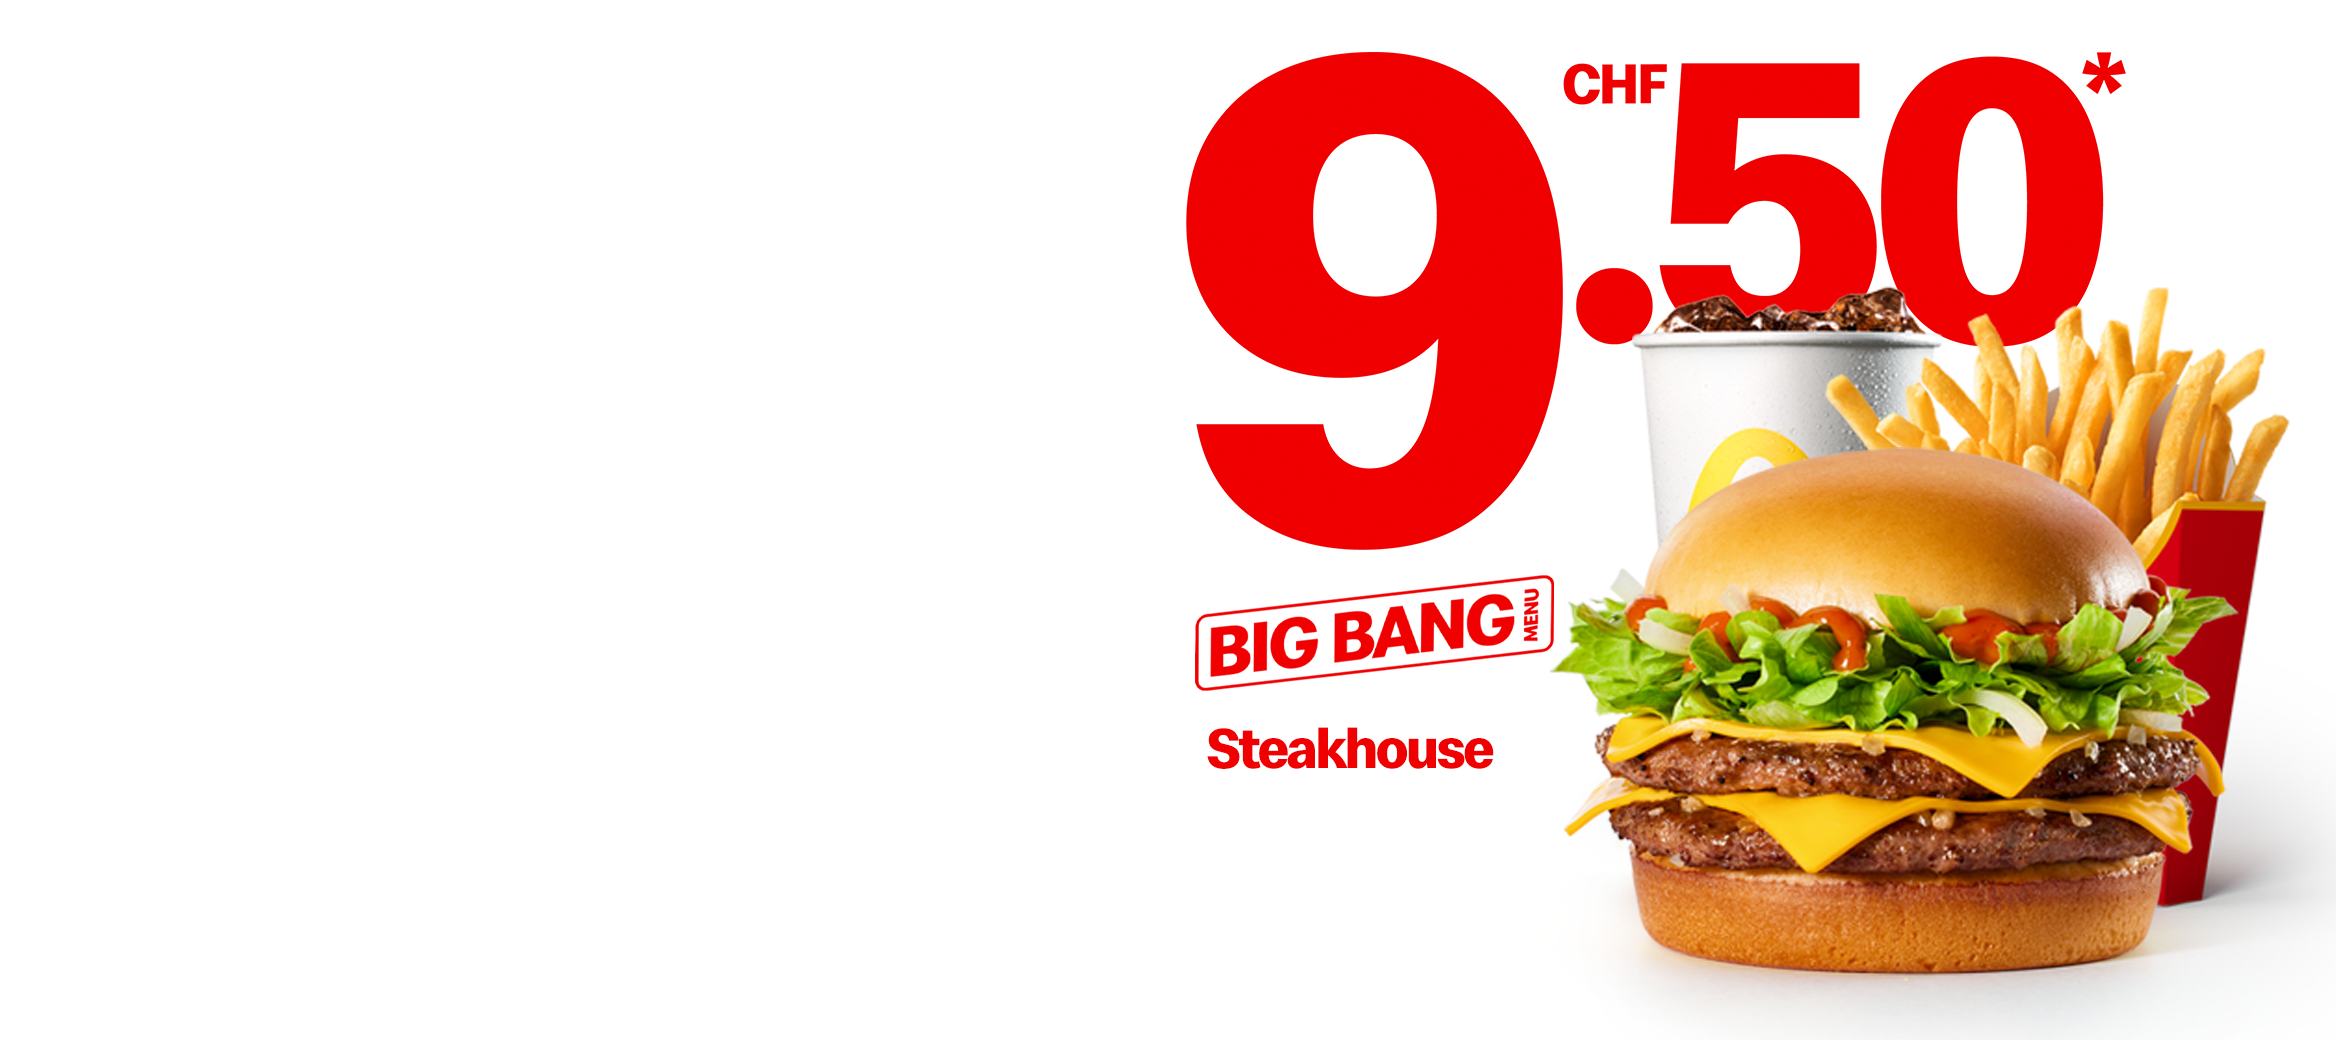 Big bang steakhouse